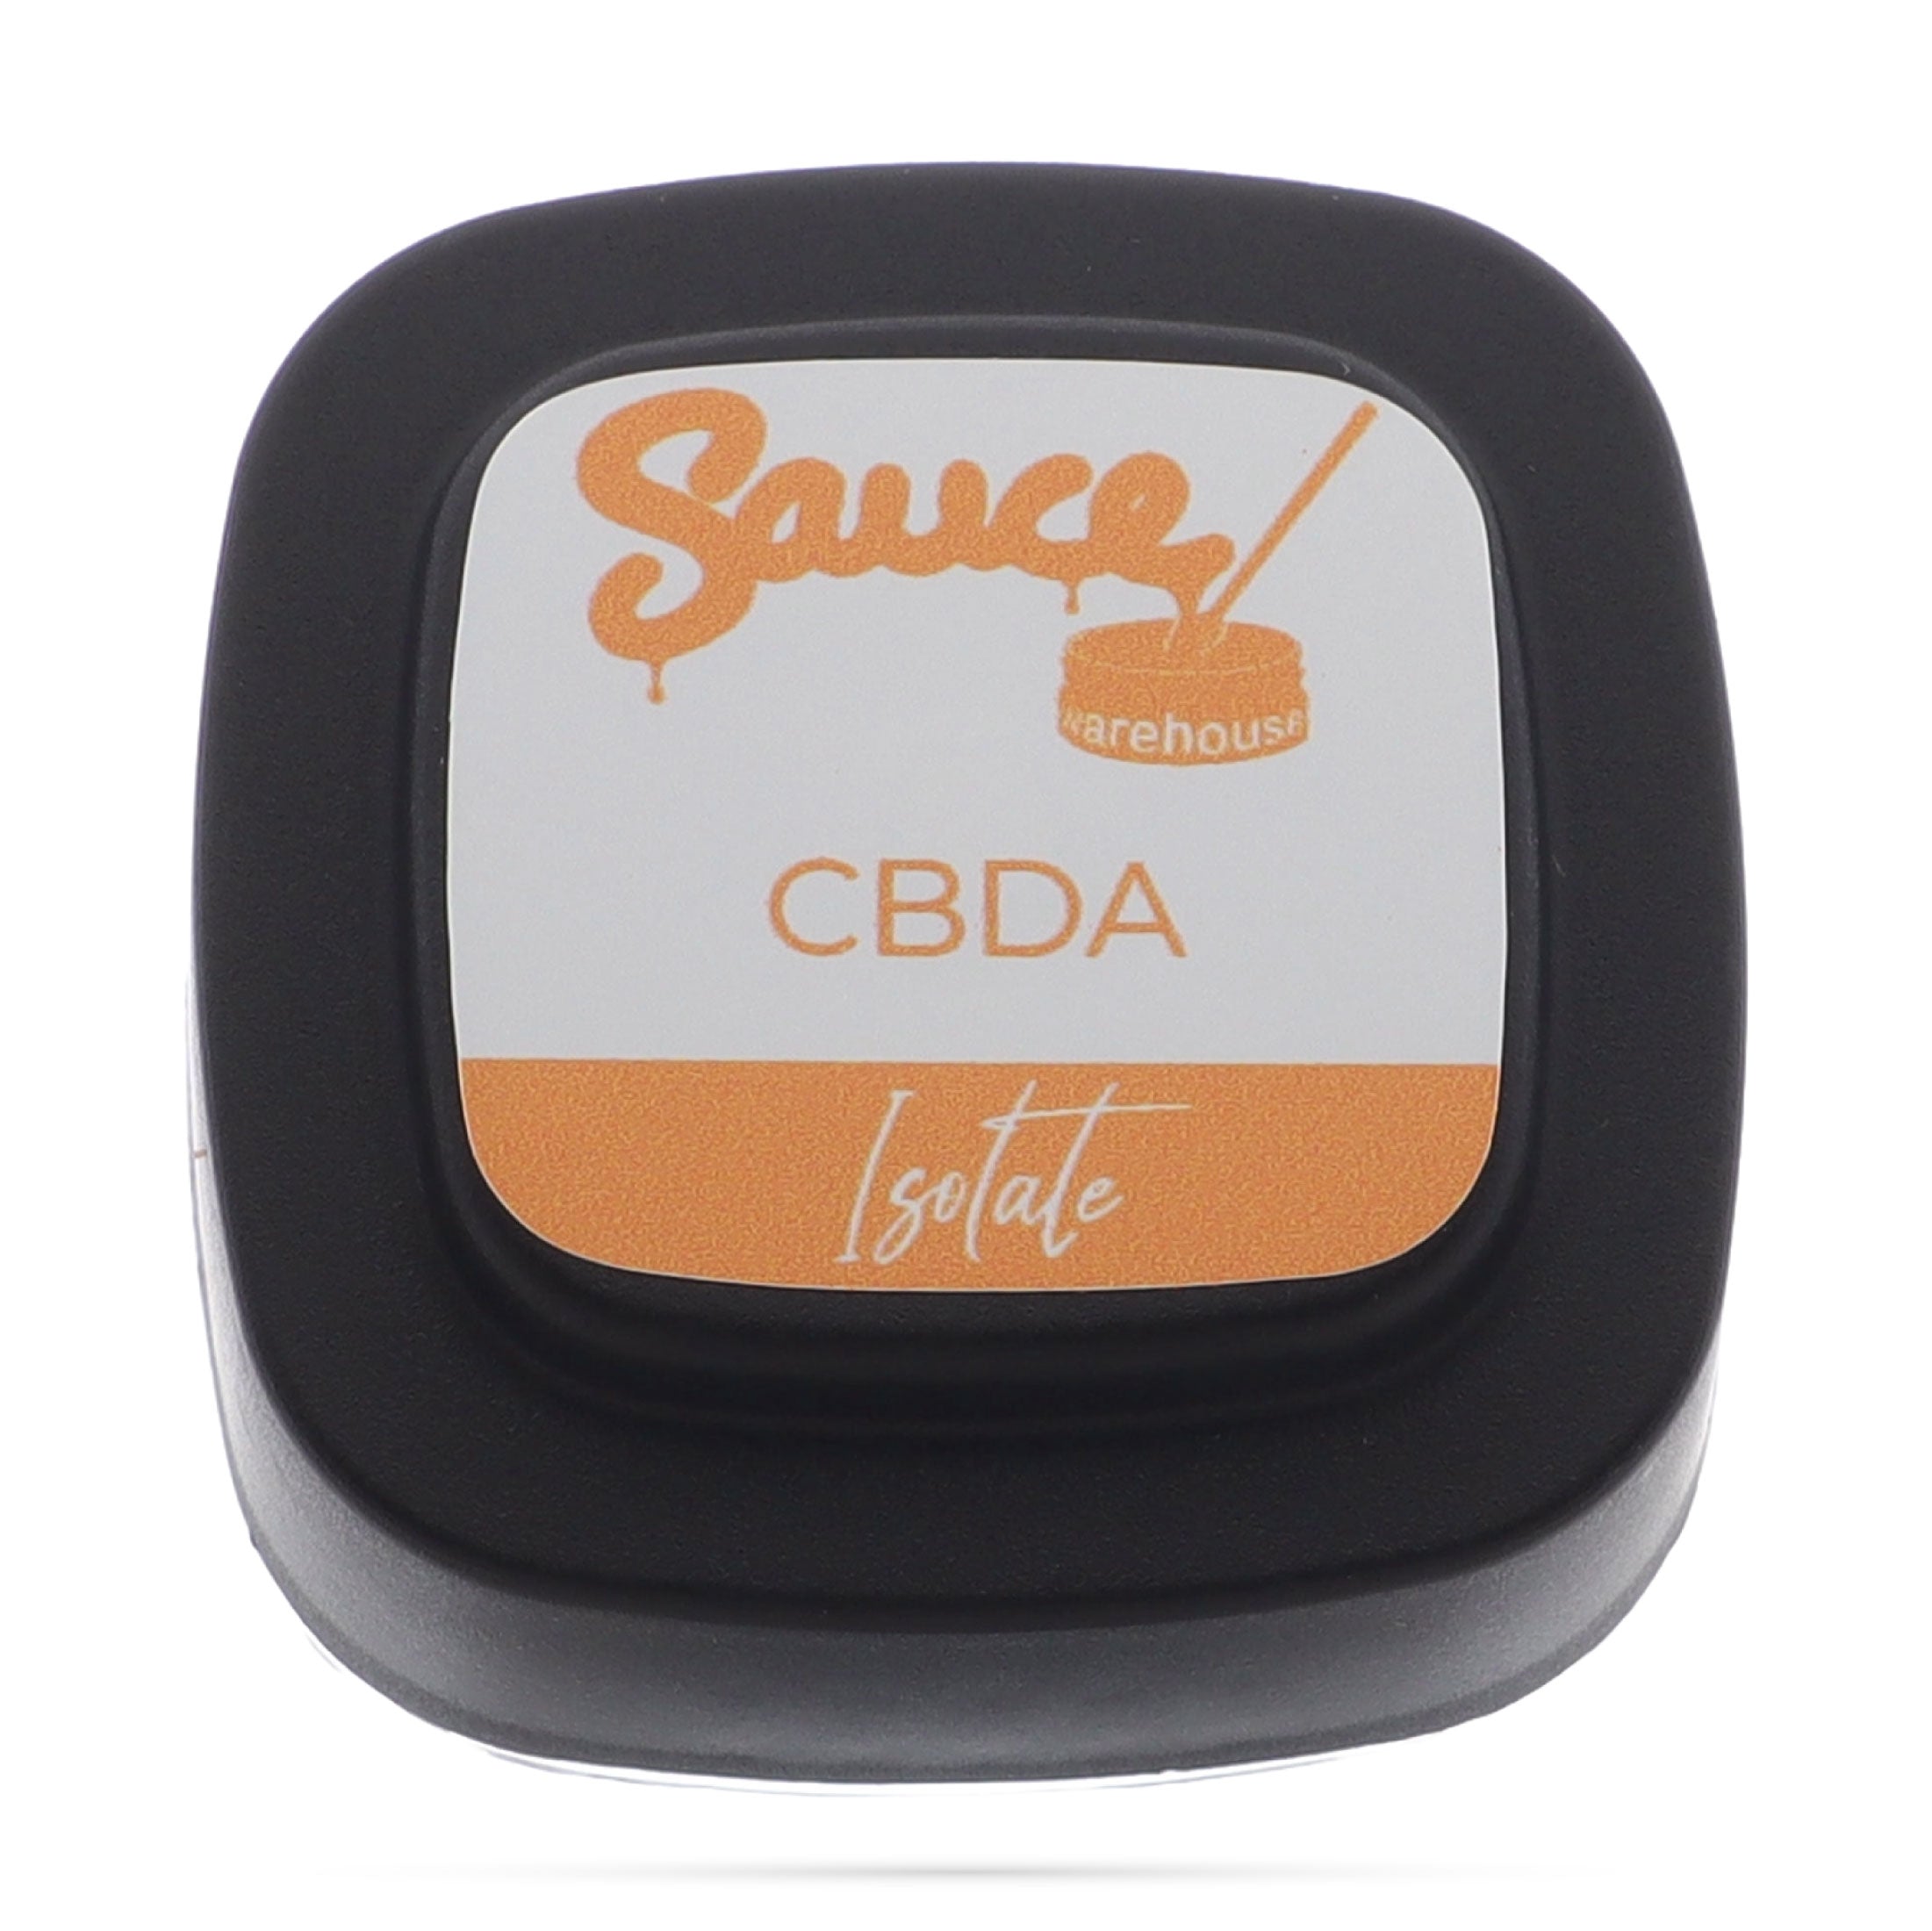 Image of Sauce Warehouse CBDA Isolate lid label.